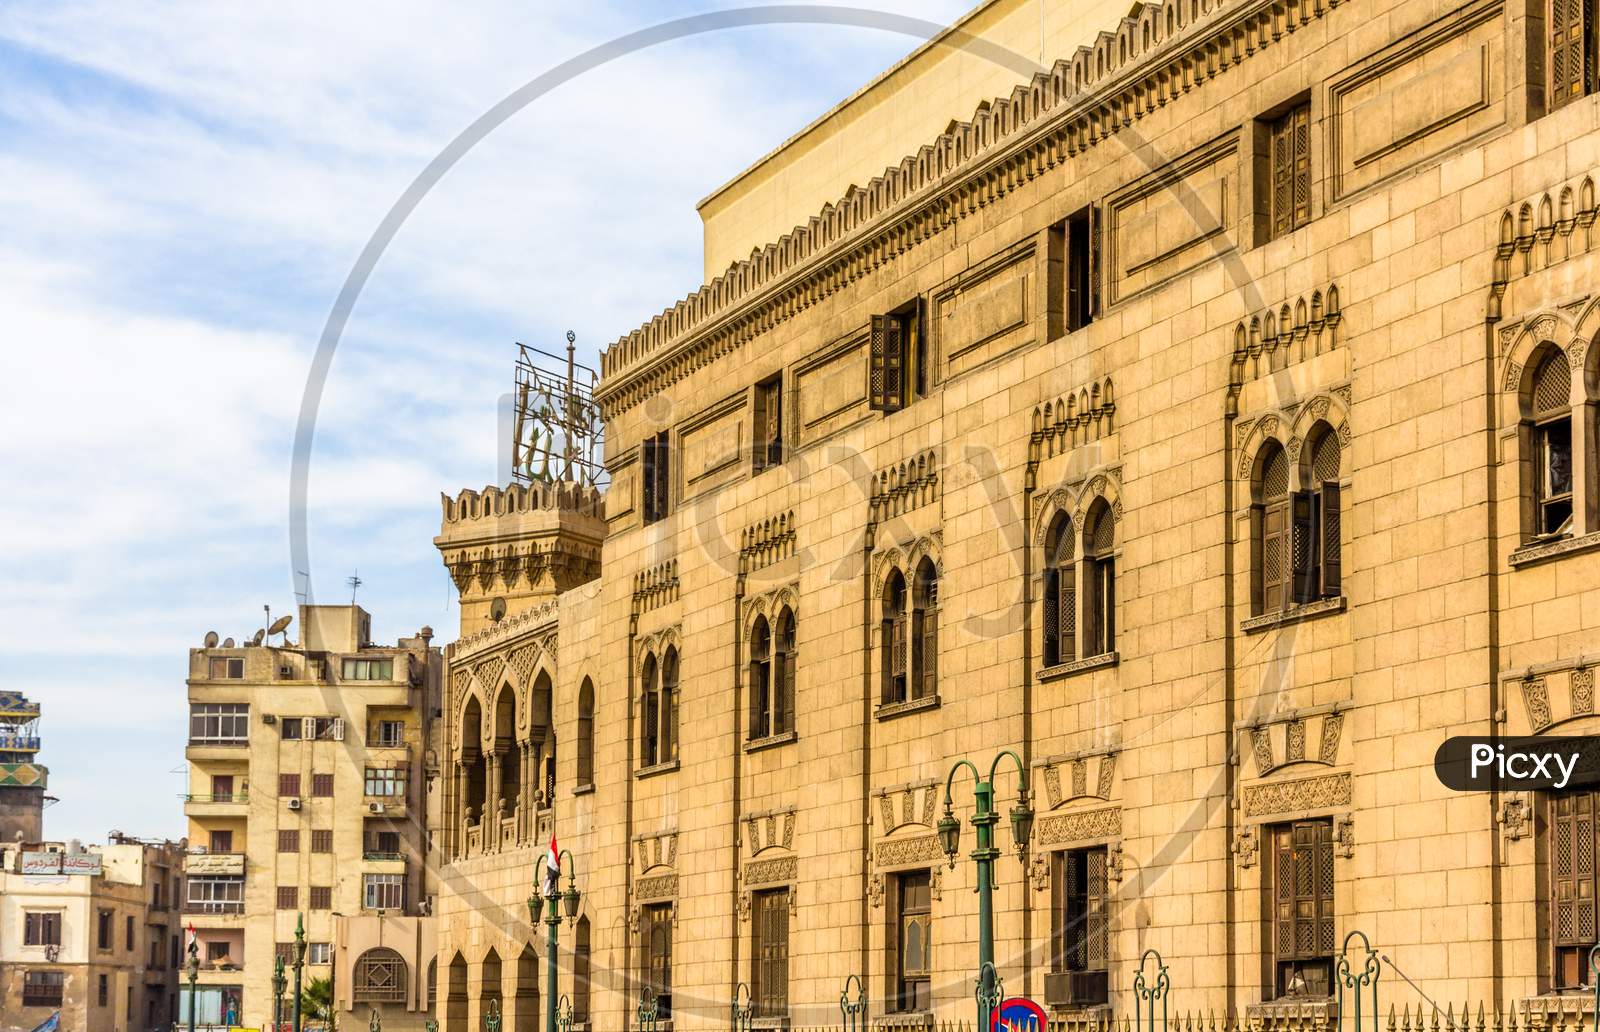 Old Administrative Building Of Al-Azhar - Cairo, Egypt